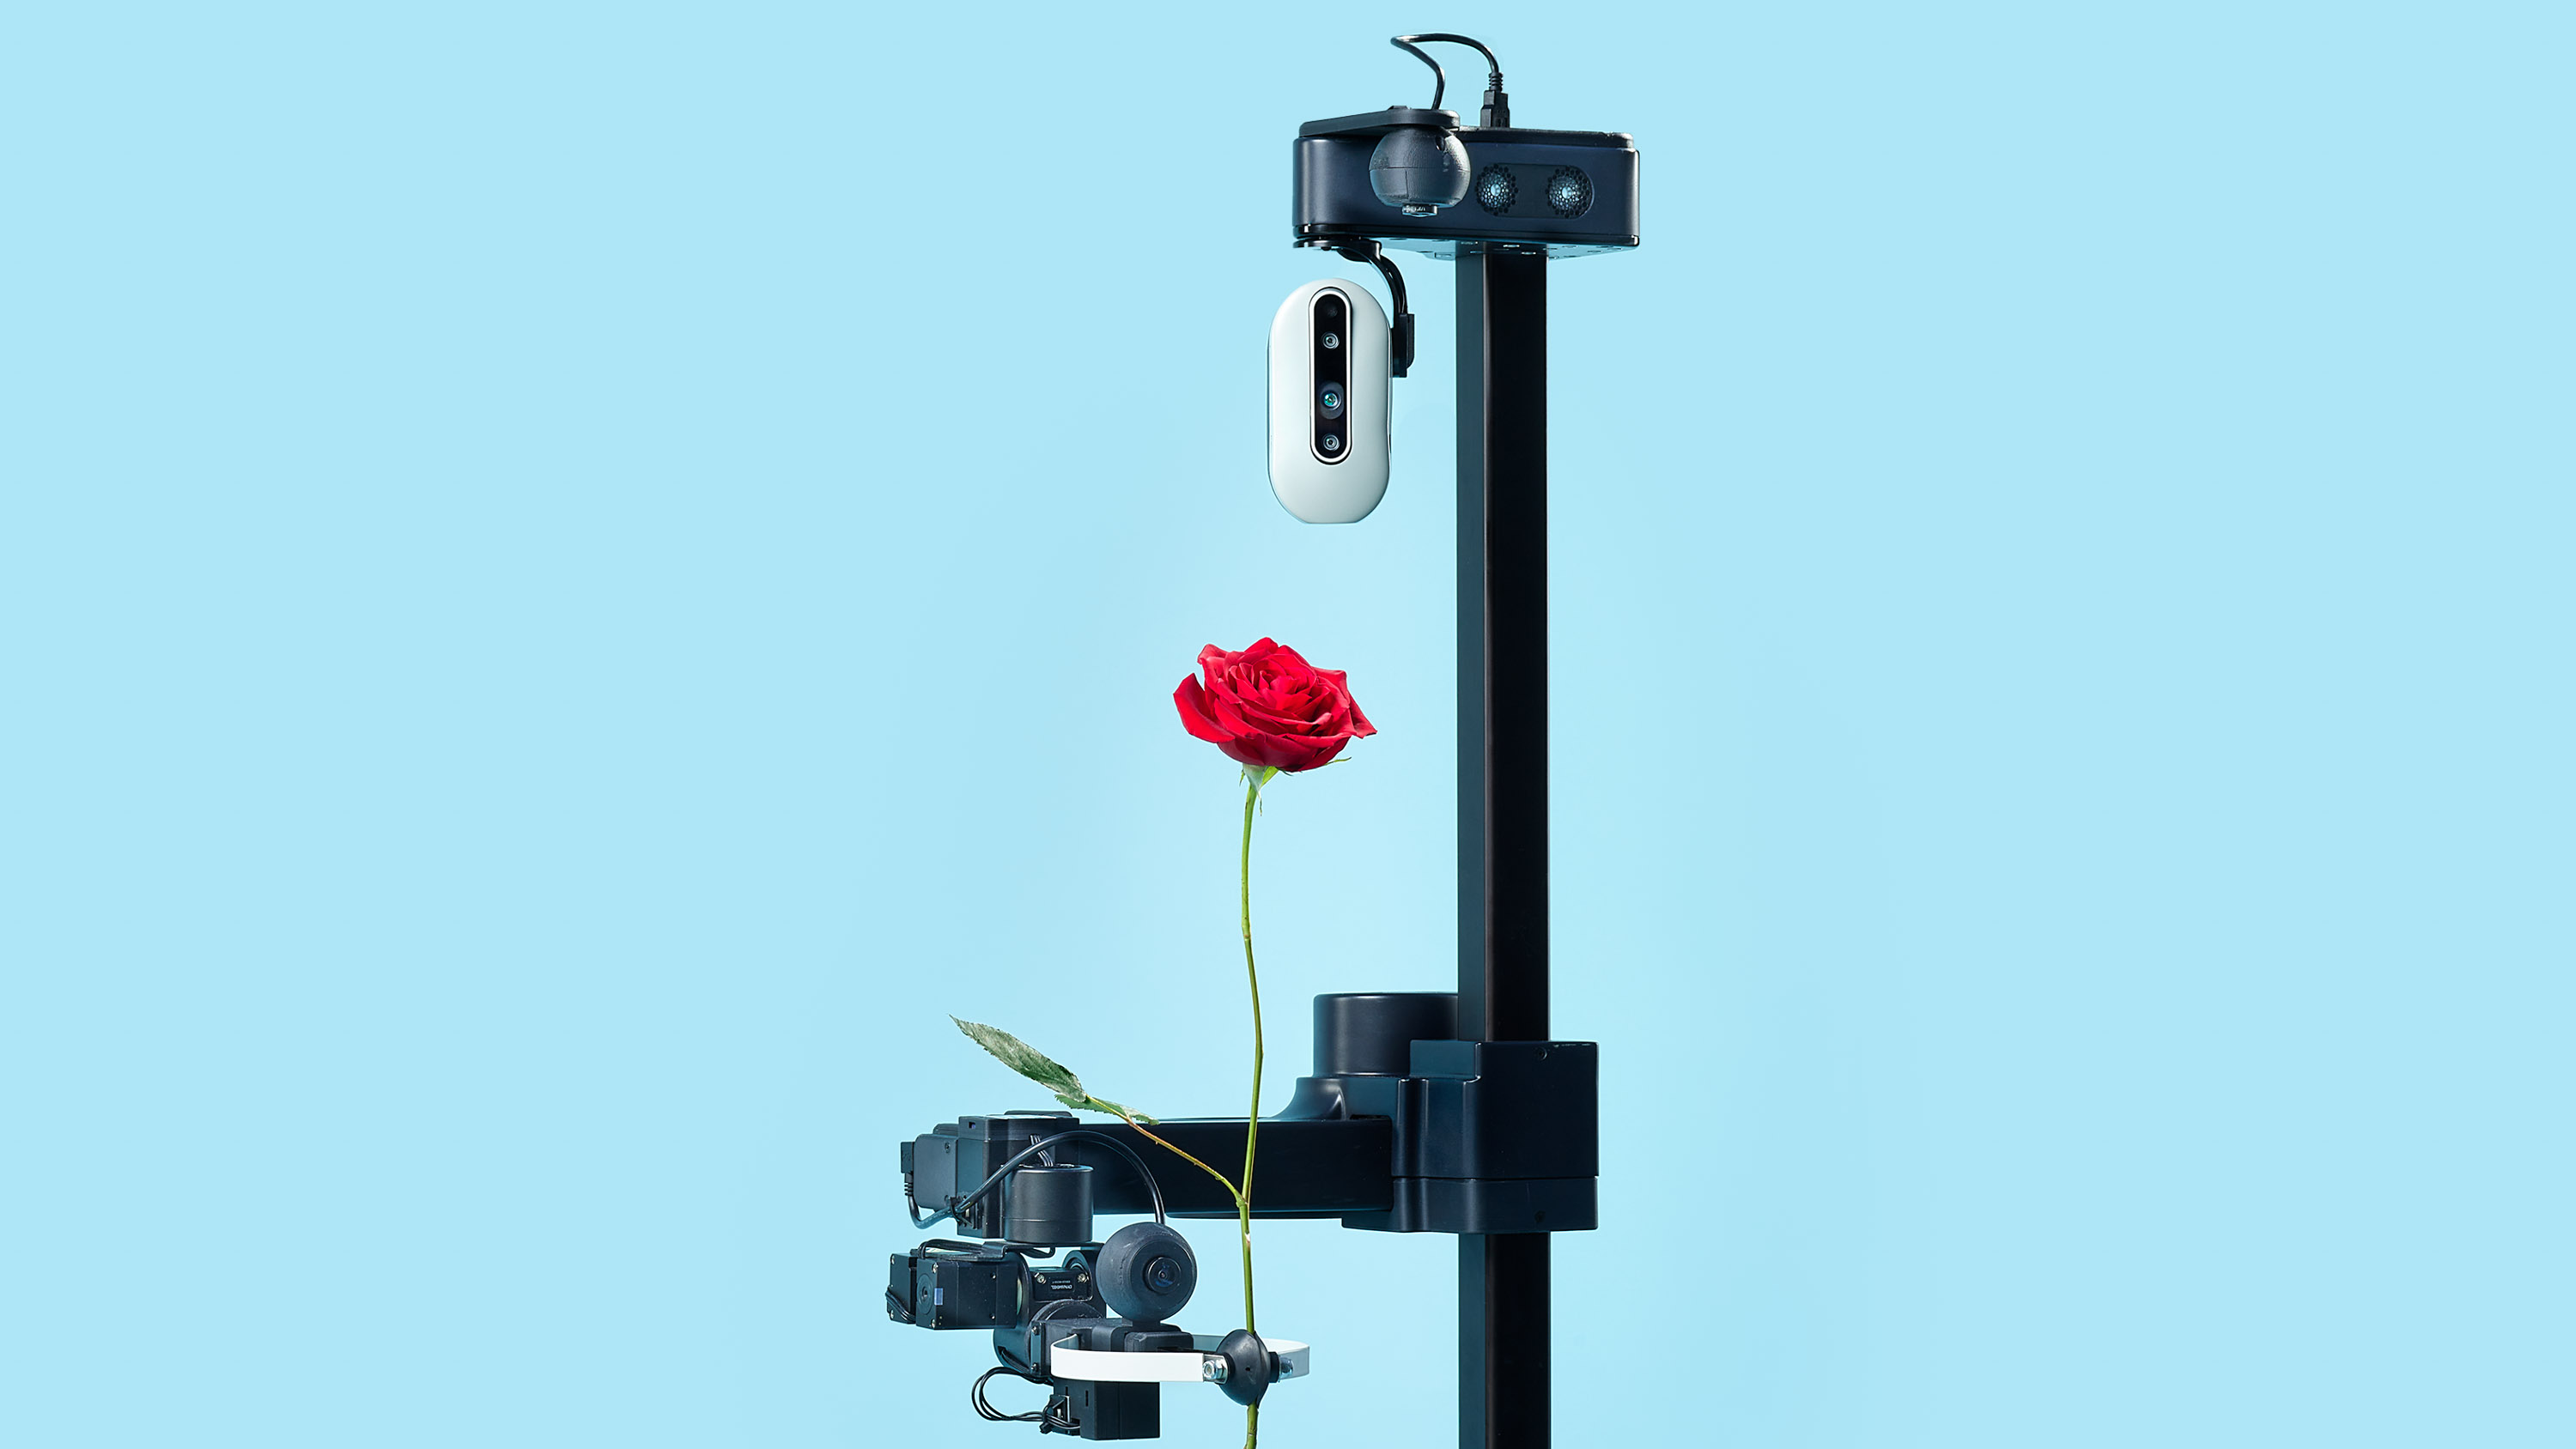 Stretch Robot Presents Rose in its gripper